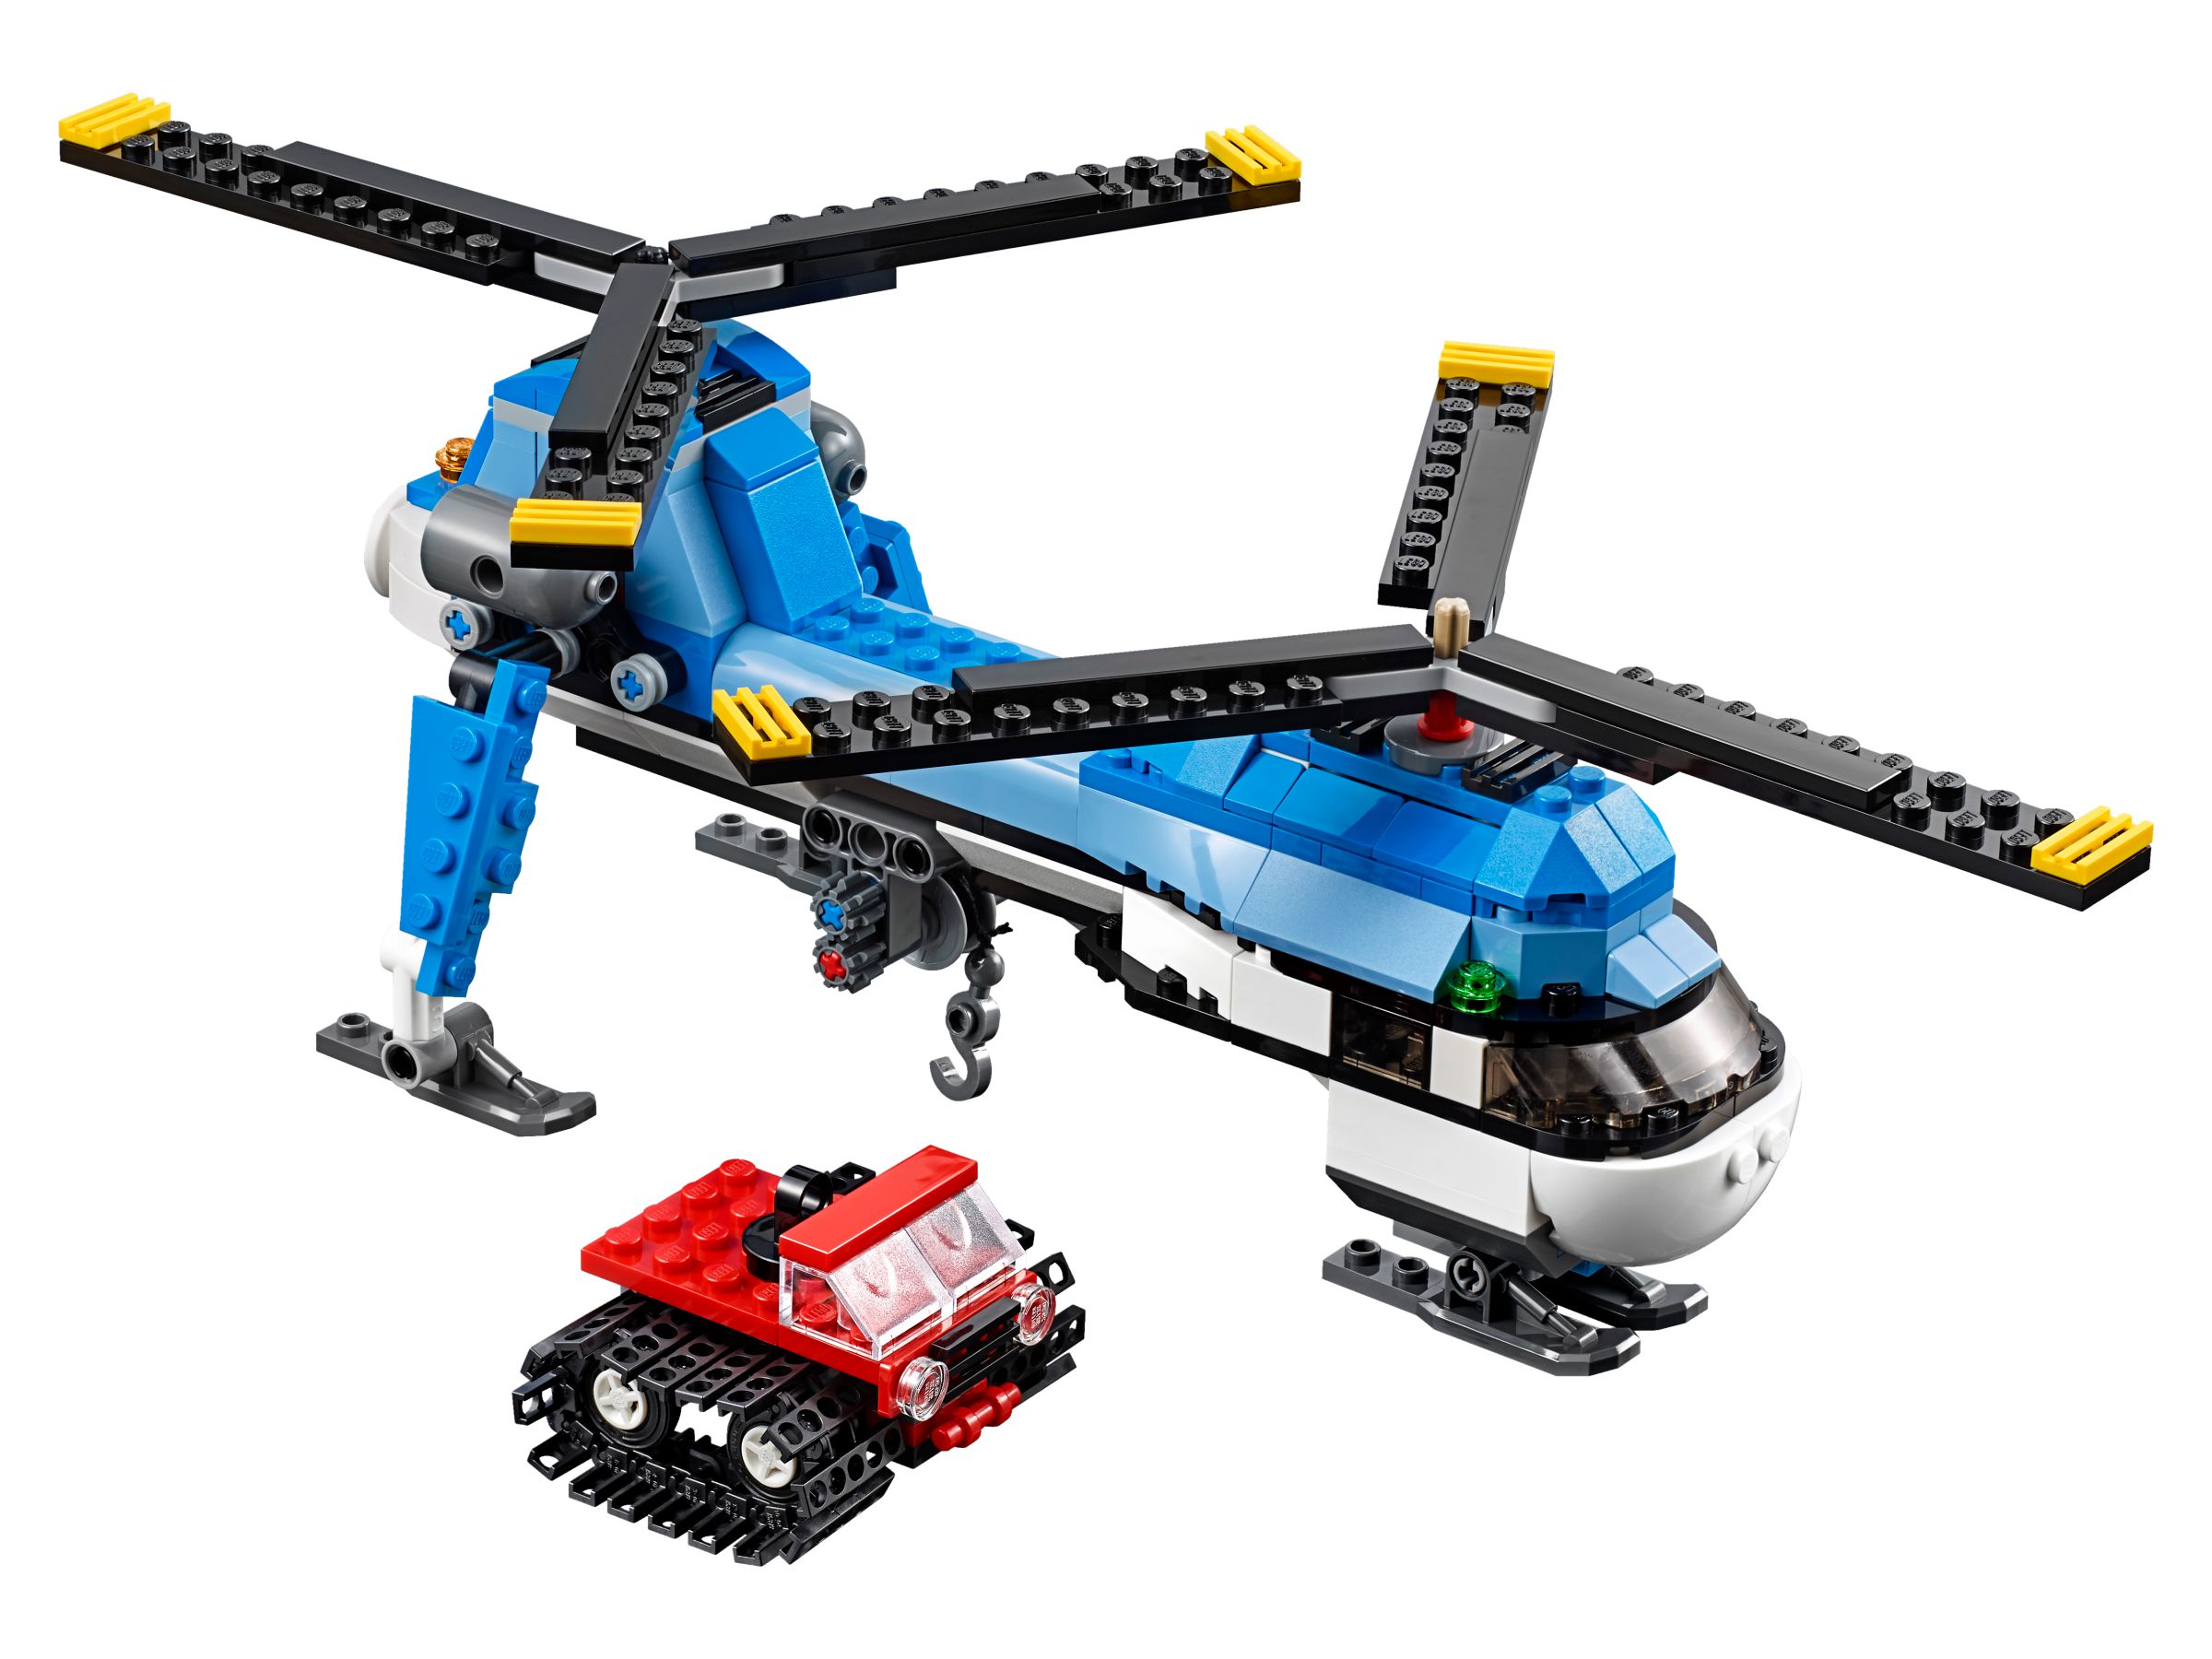 LEGO Creator 31049 Doppelrotor-Hubschrauber